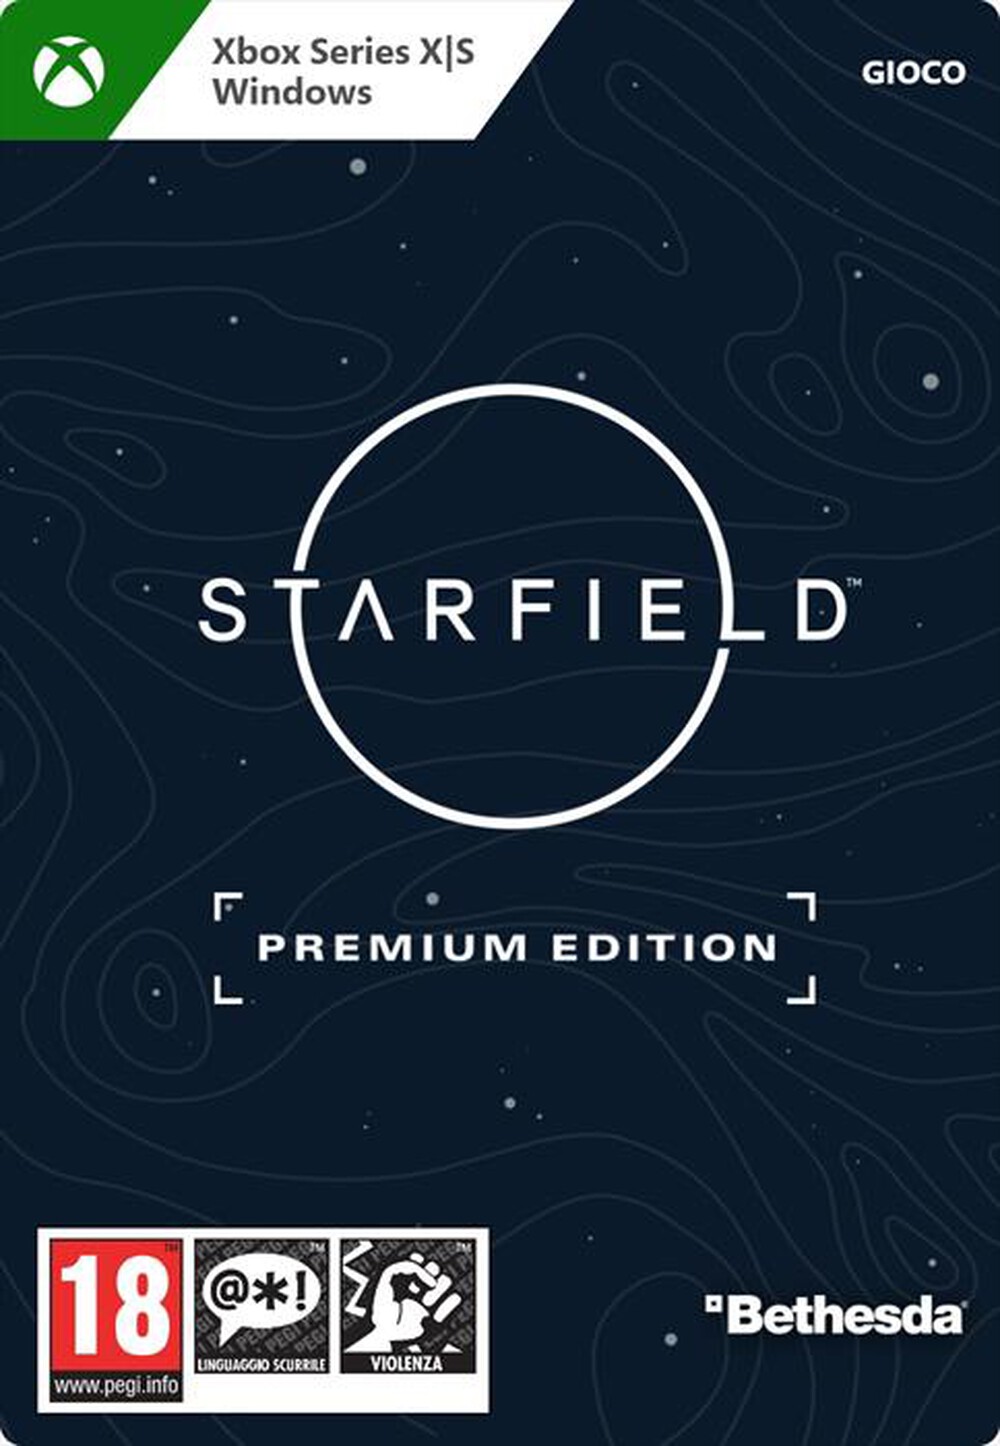 "MICROSOFT - Starfield Premium Edition"